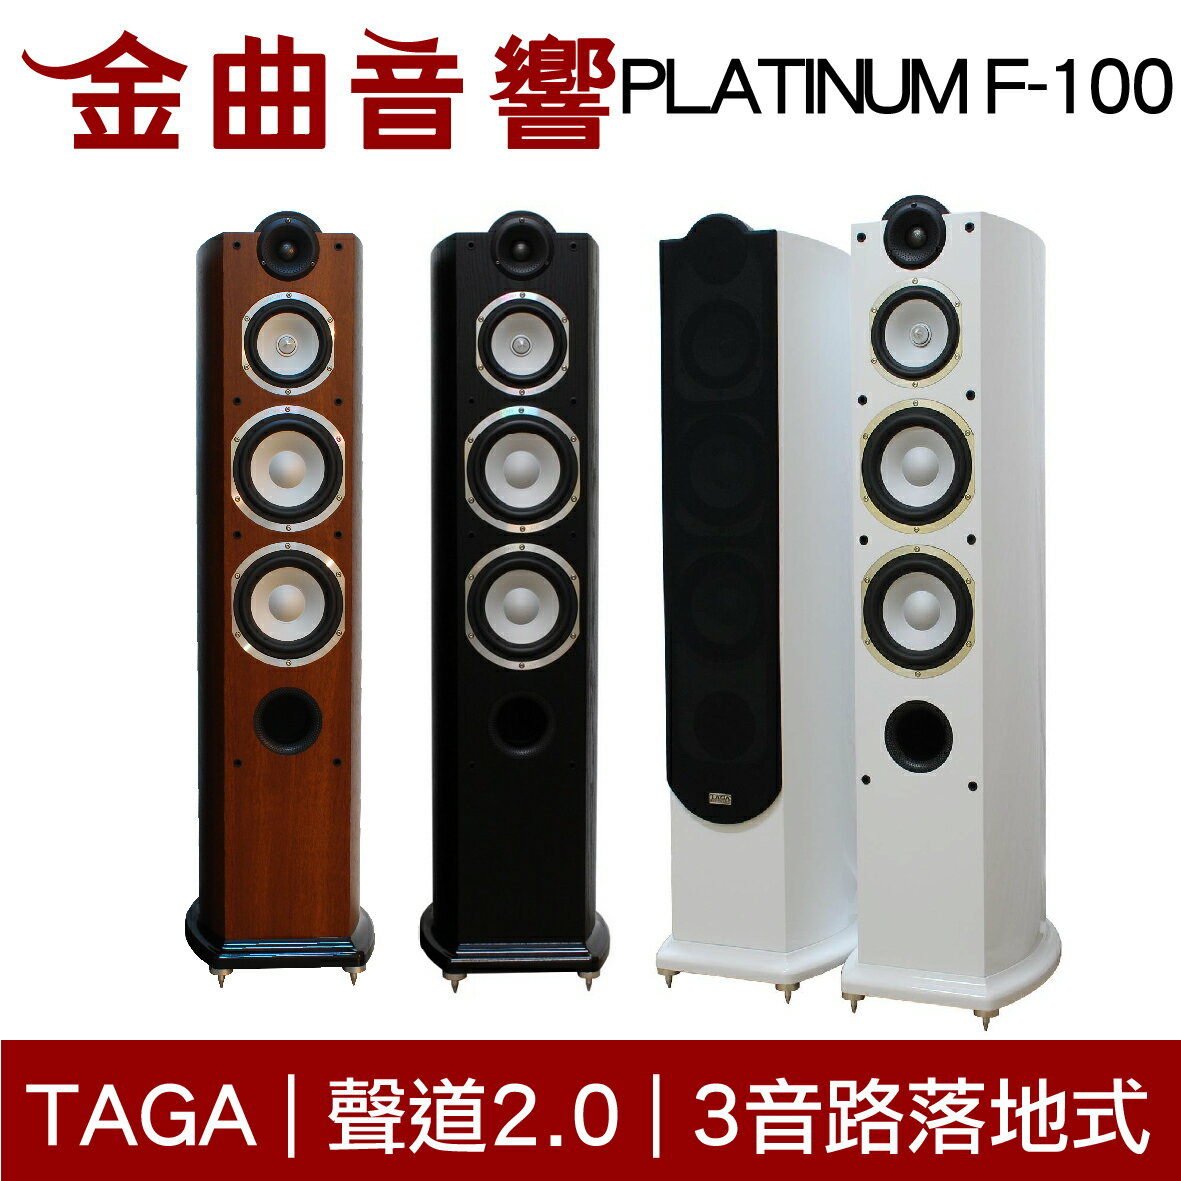 TagA PLATINUM F-100 三色可選 主喇叭 3音路 落地式 | 金曲音響